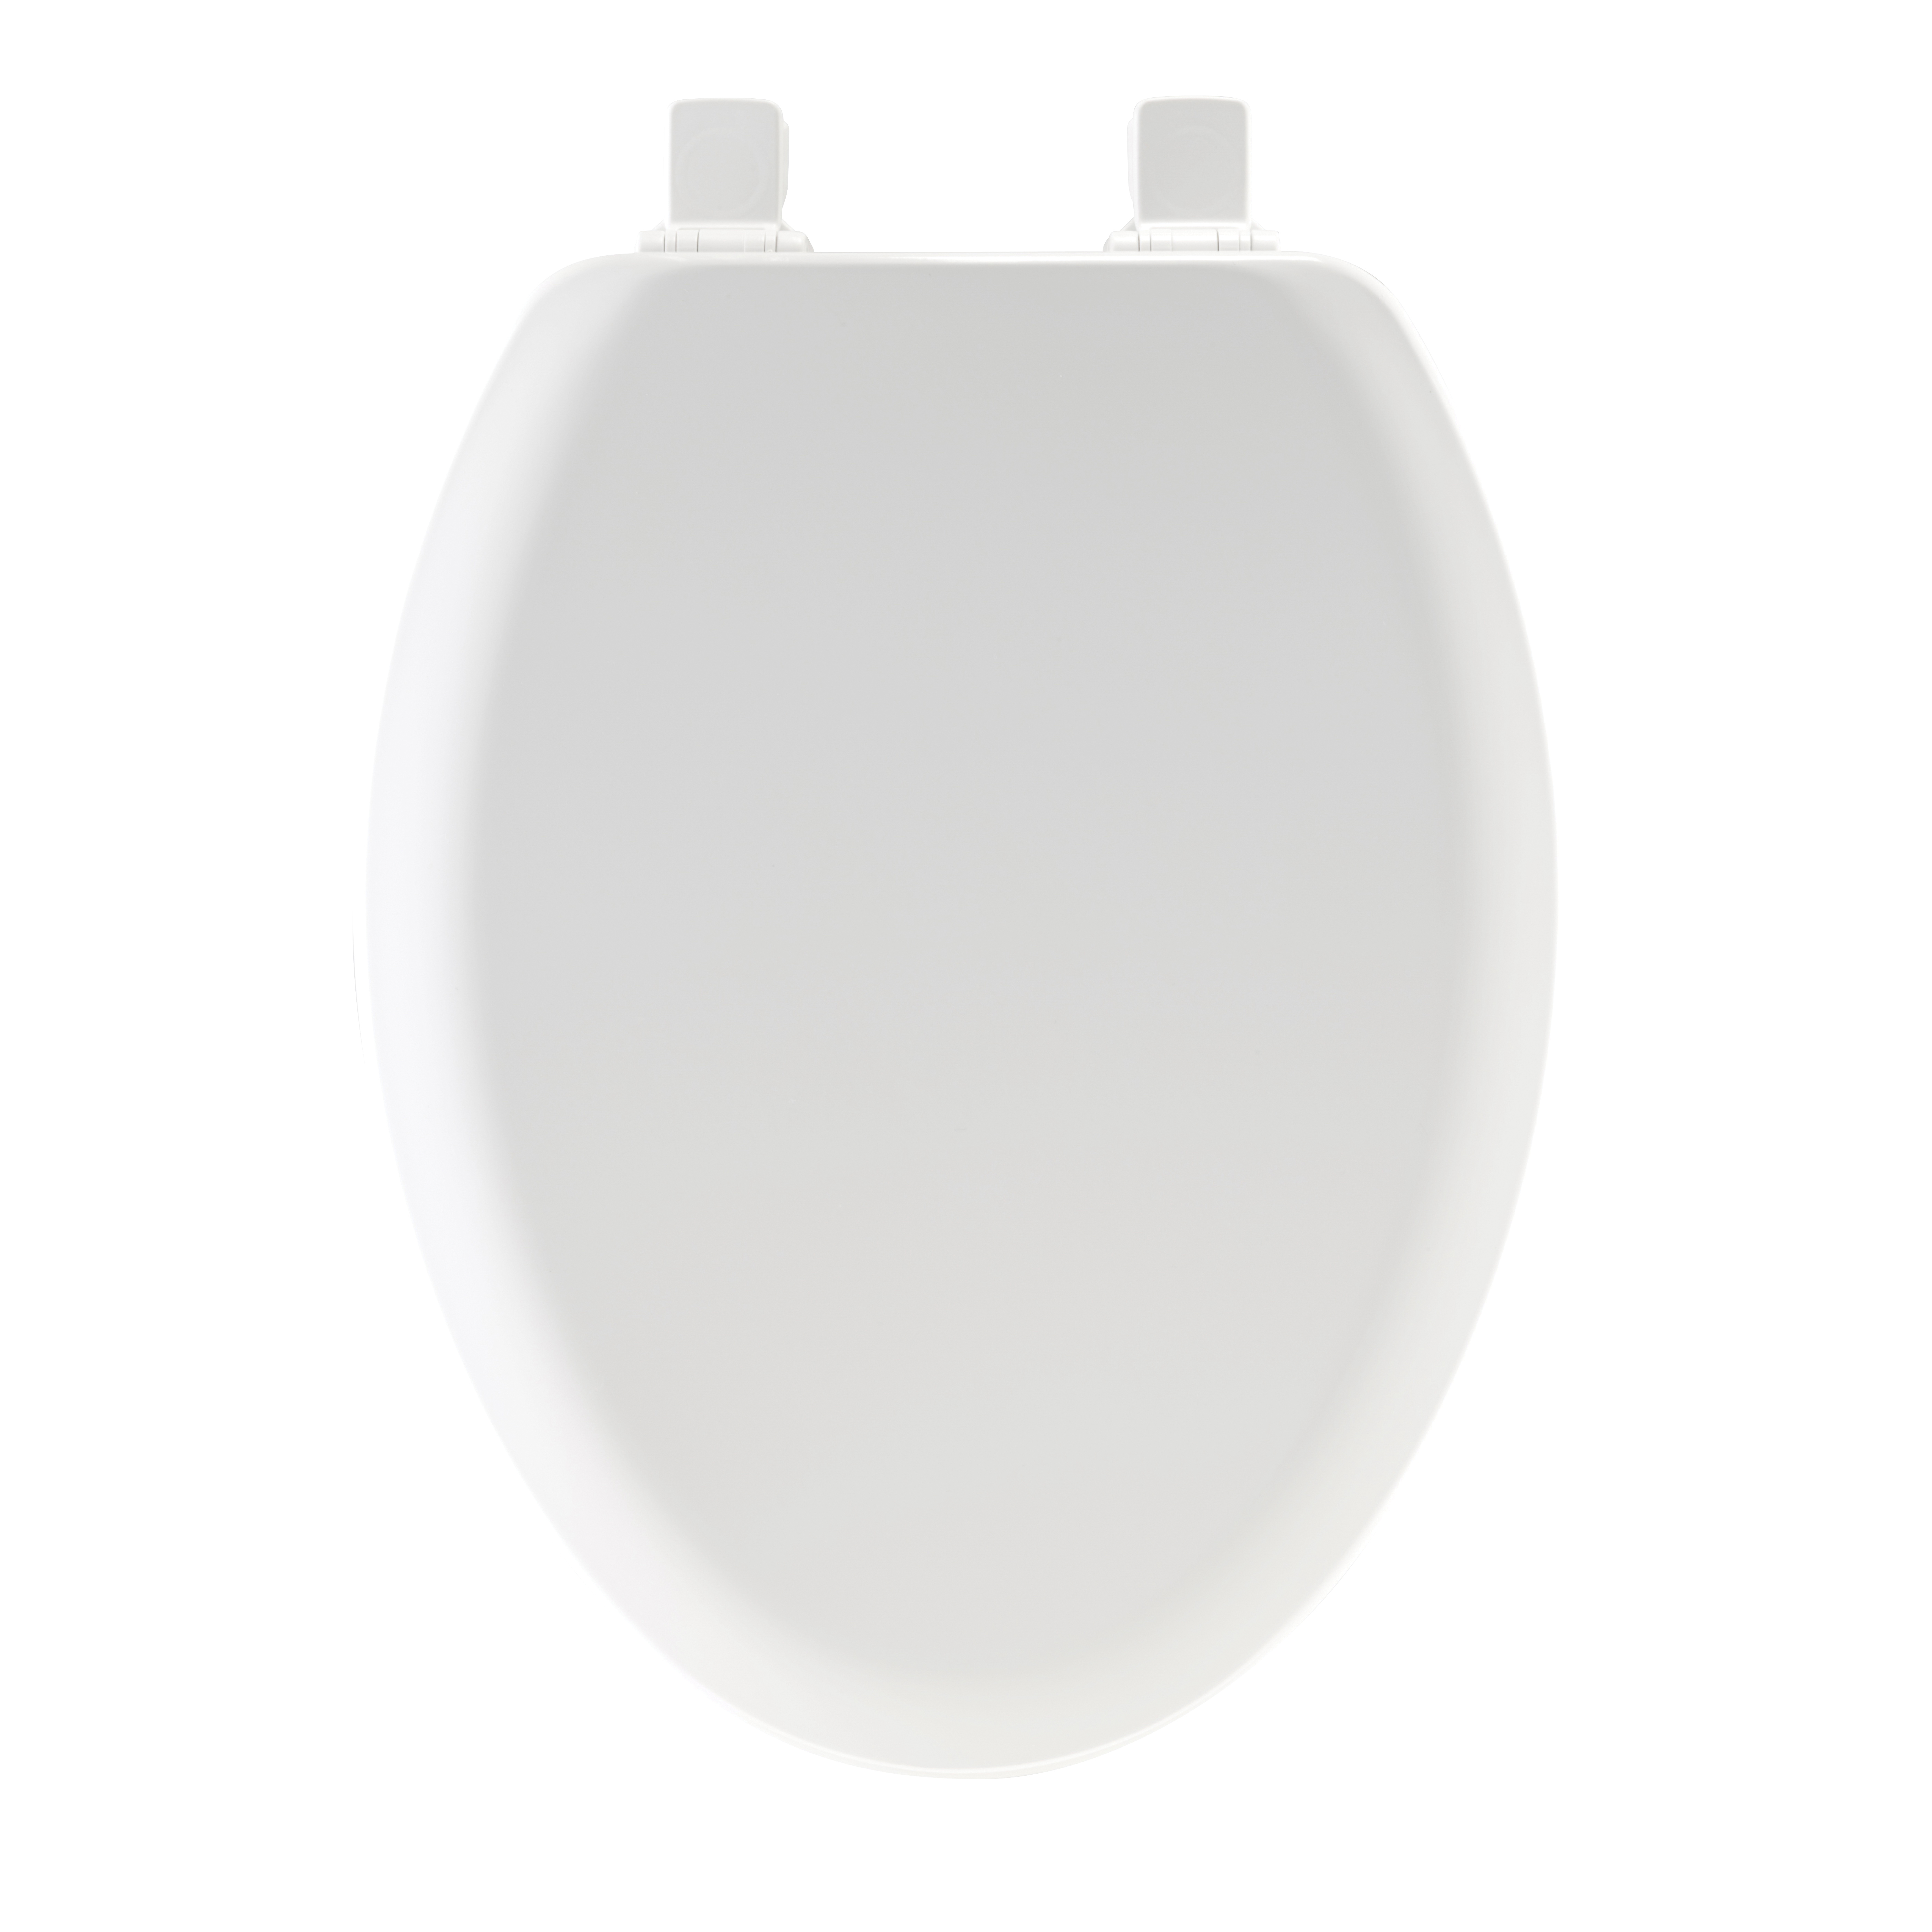 141EC-000 Toilet Seat, Elongated, Wood, White, Twist Hinge